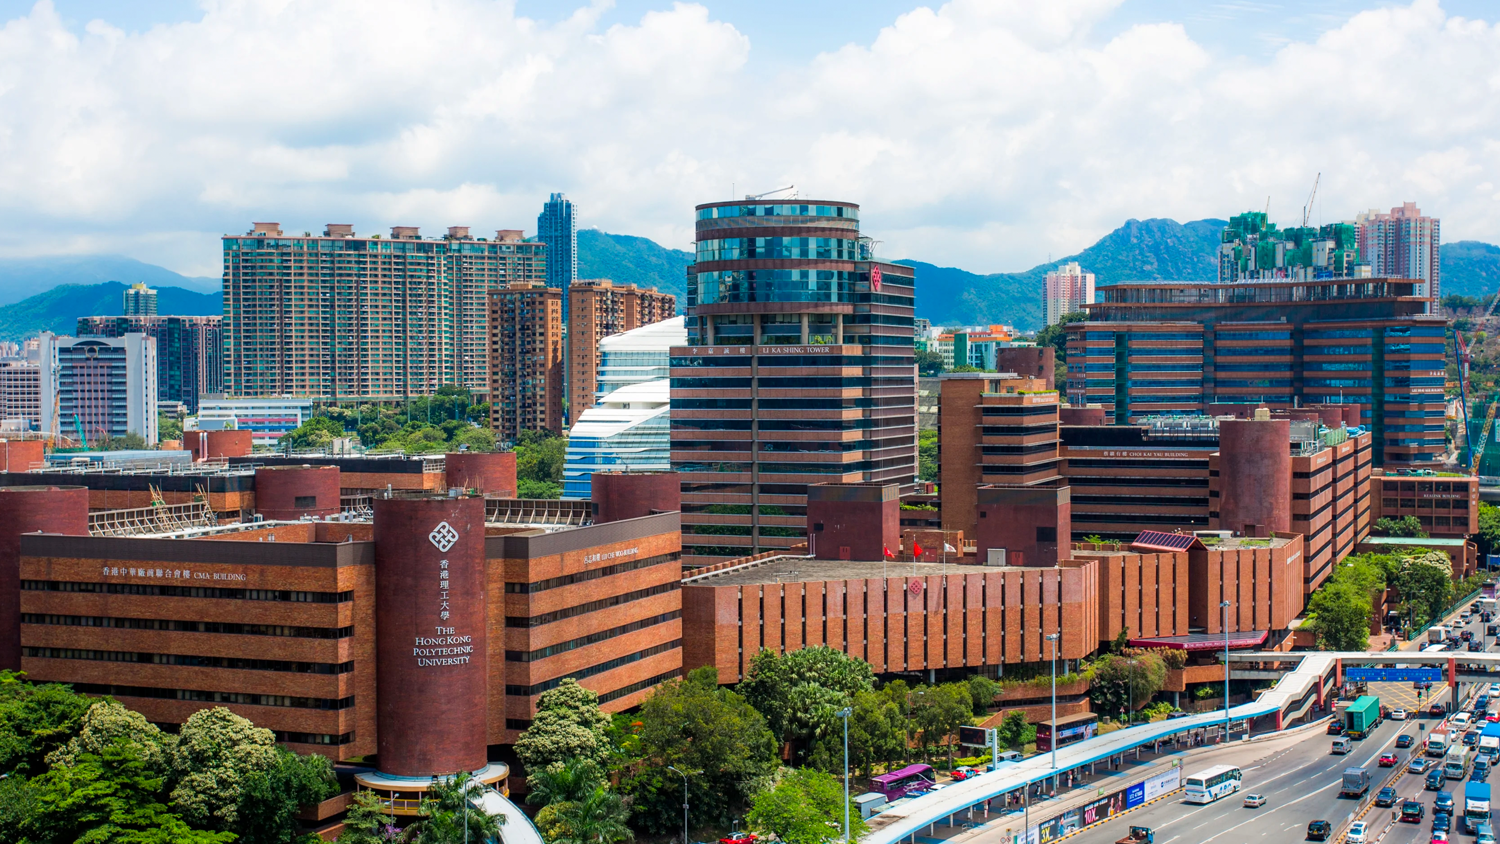 Skyline of the Hong Kong Polytechnic University